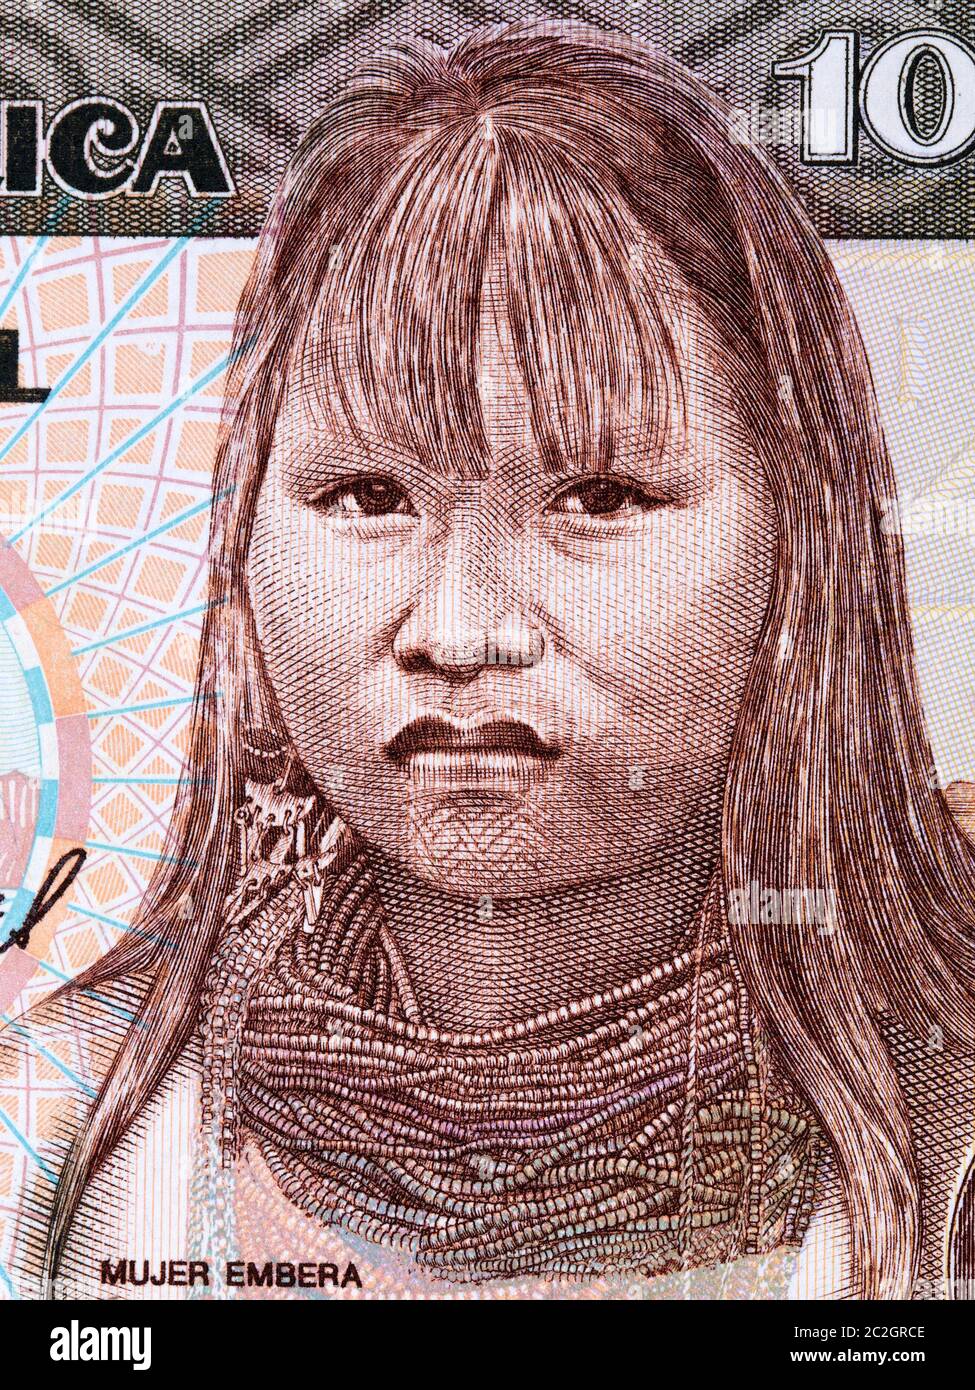 Mujer Embera a portrait Stock Photo